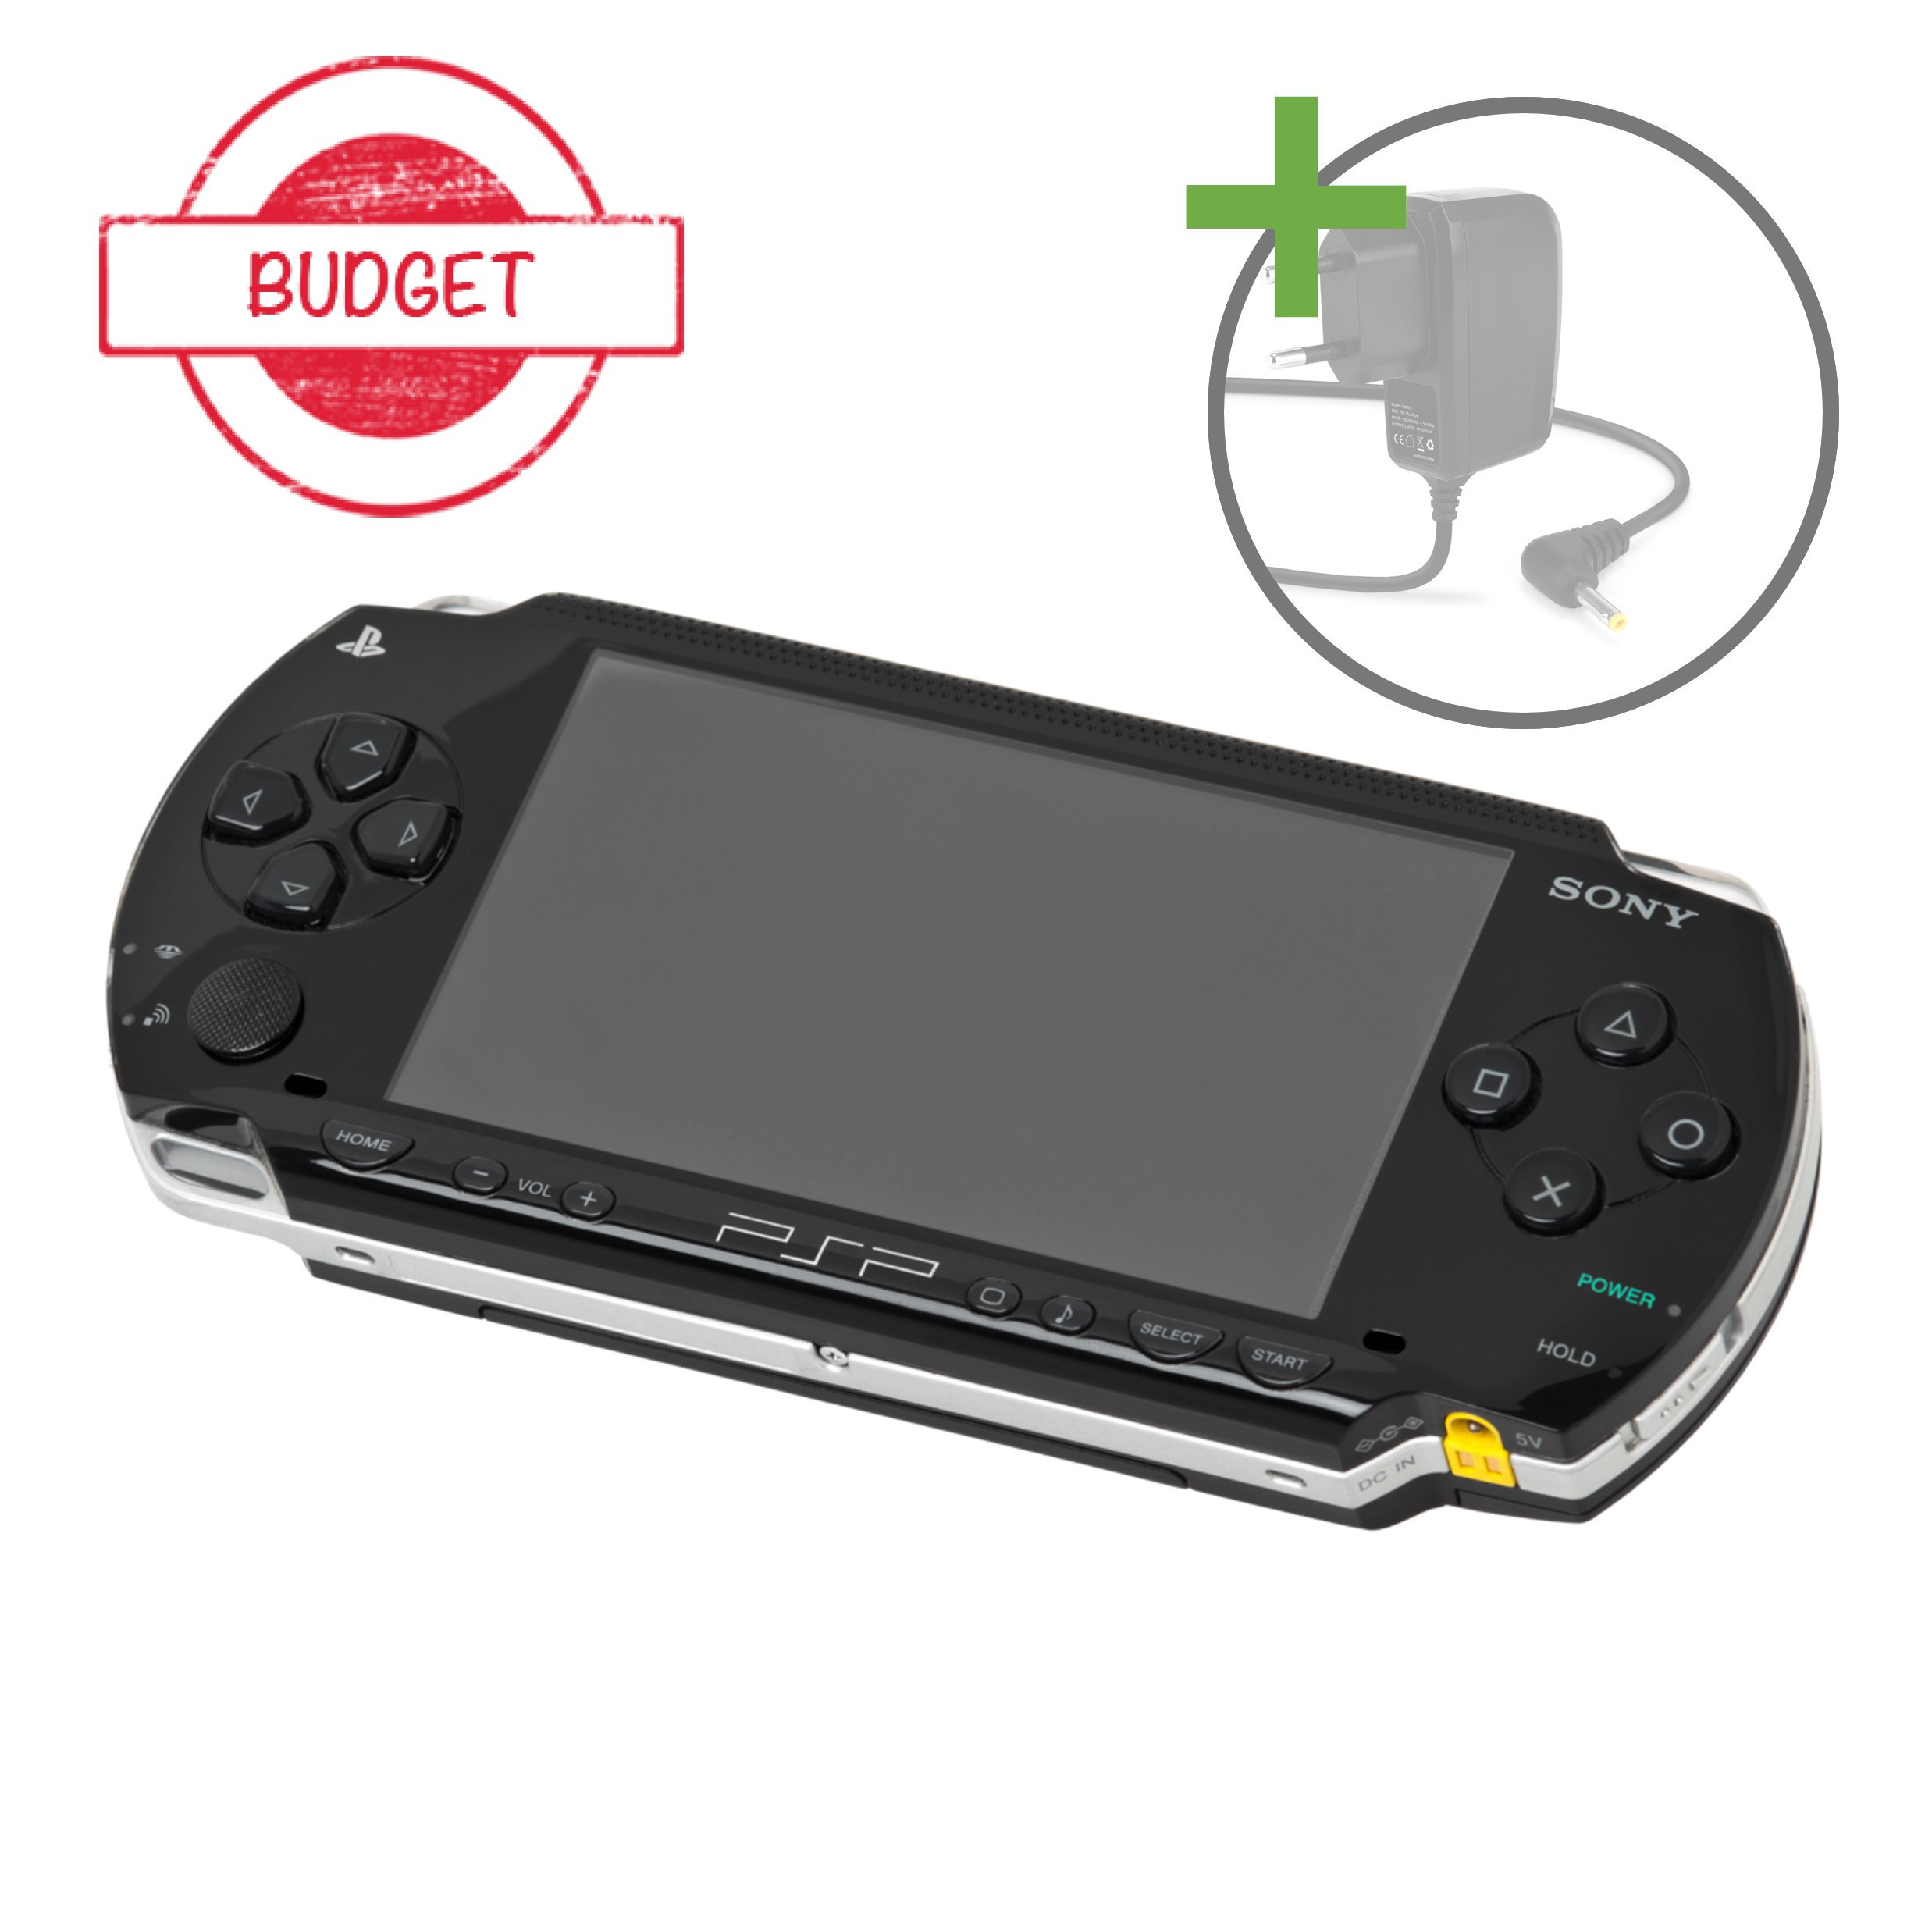 Playstation Portable PSP 1000 - Zwart - Budget - Playstation Portable Hardware - 3